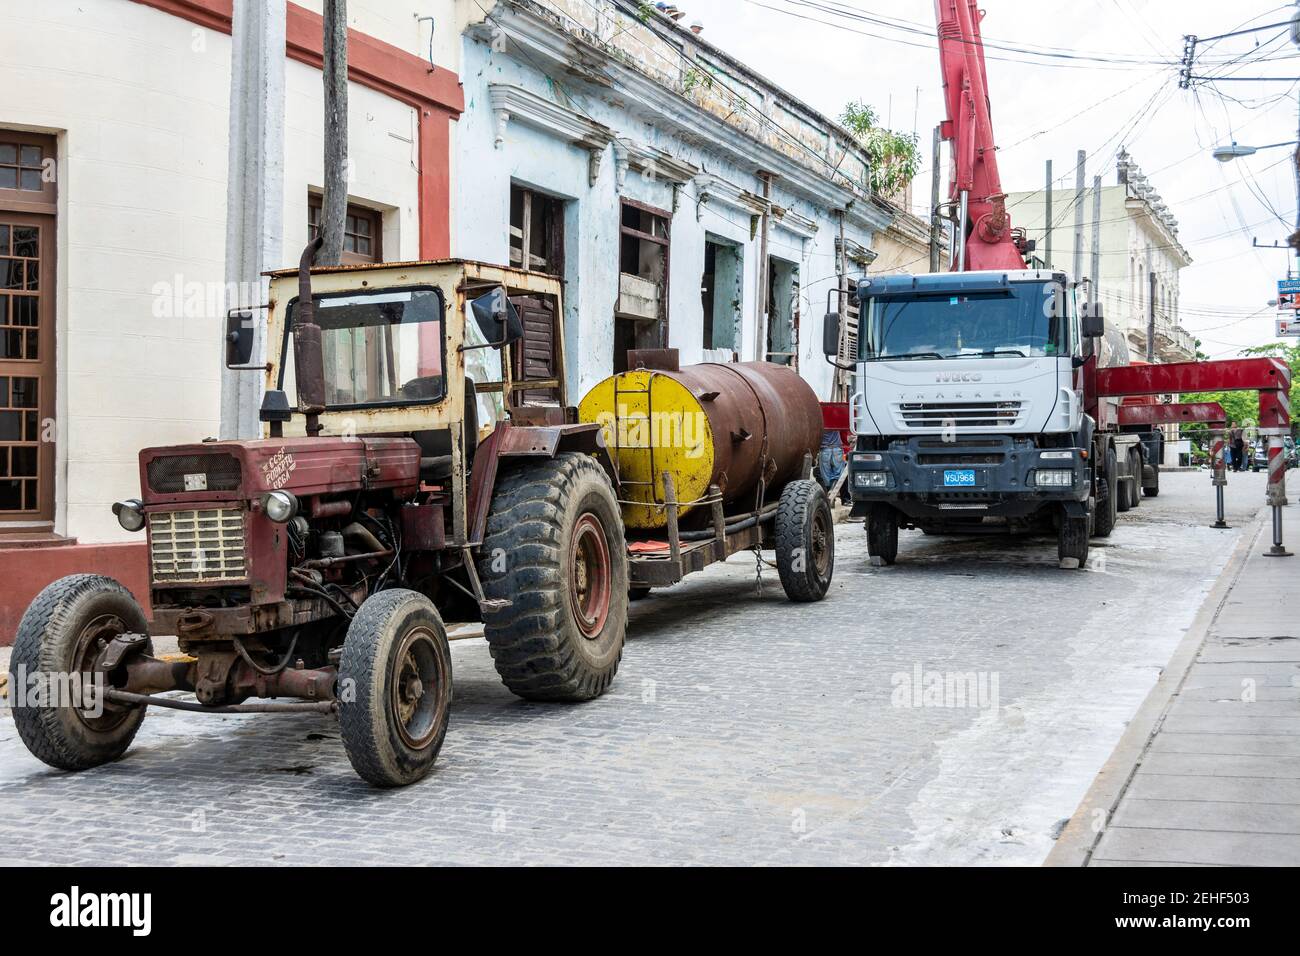 Crane and tractor working in a building repair, Santa Clara, Cuba 2014 Stock Photo